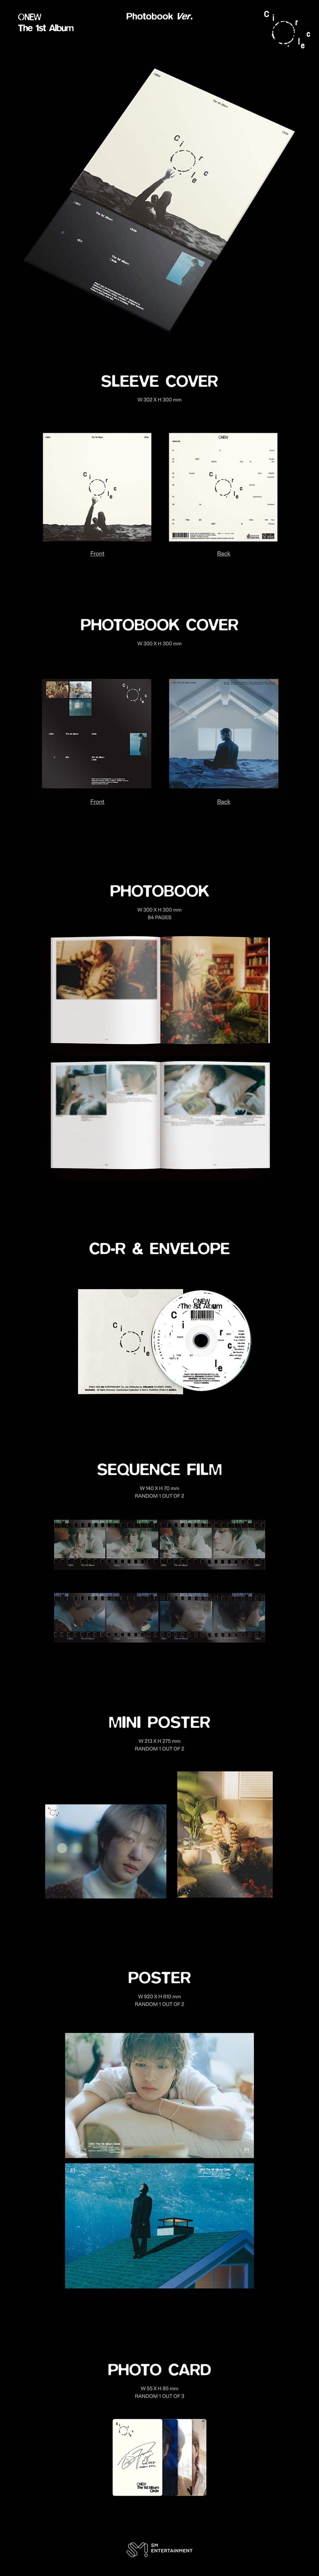 onew-1st-album-circle-photo-book-ver-wholesales